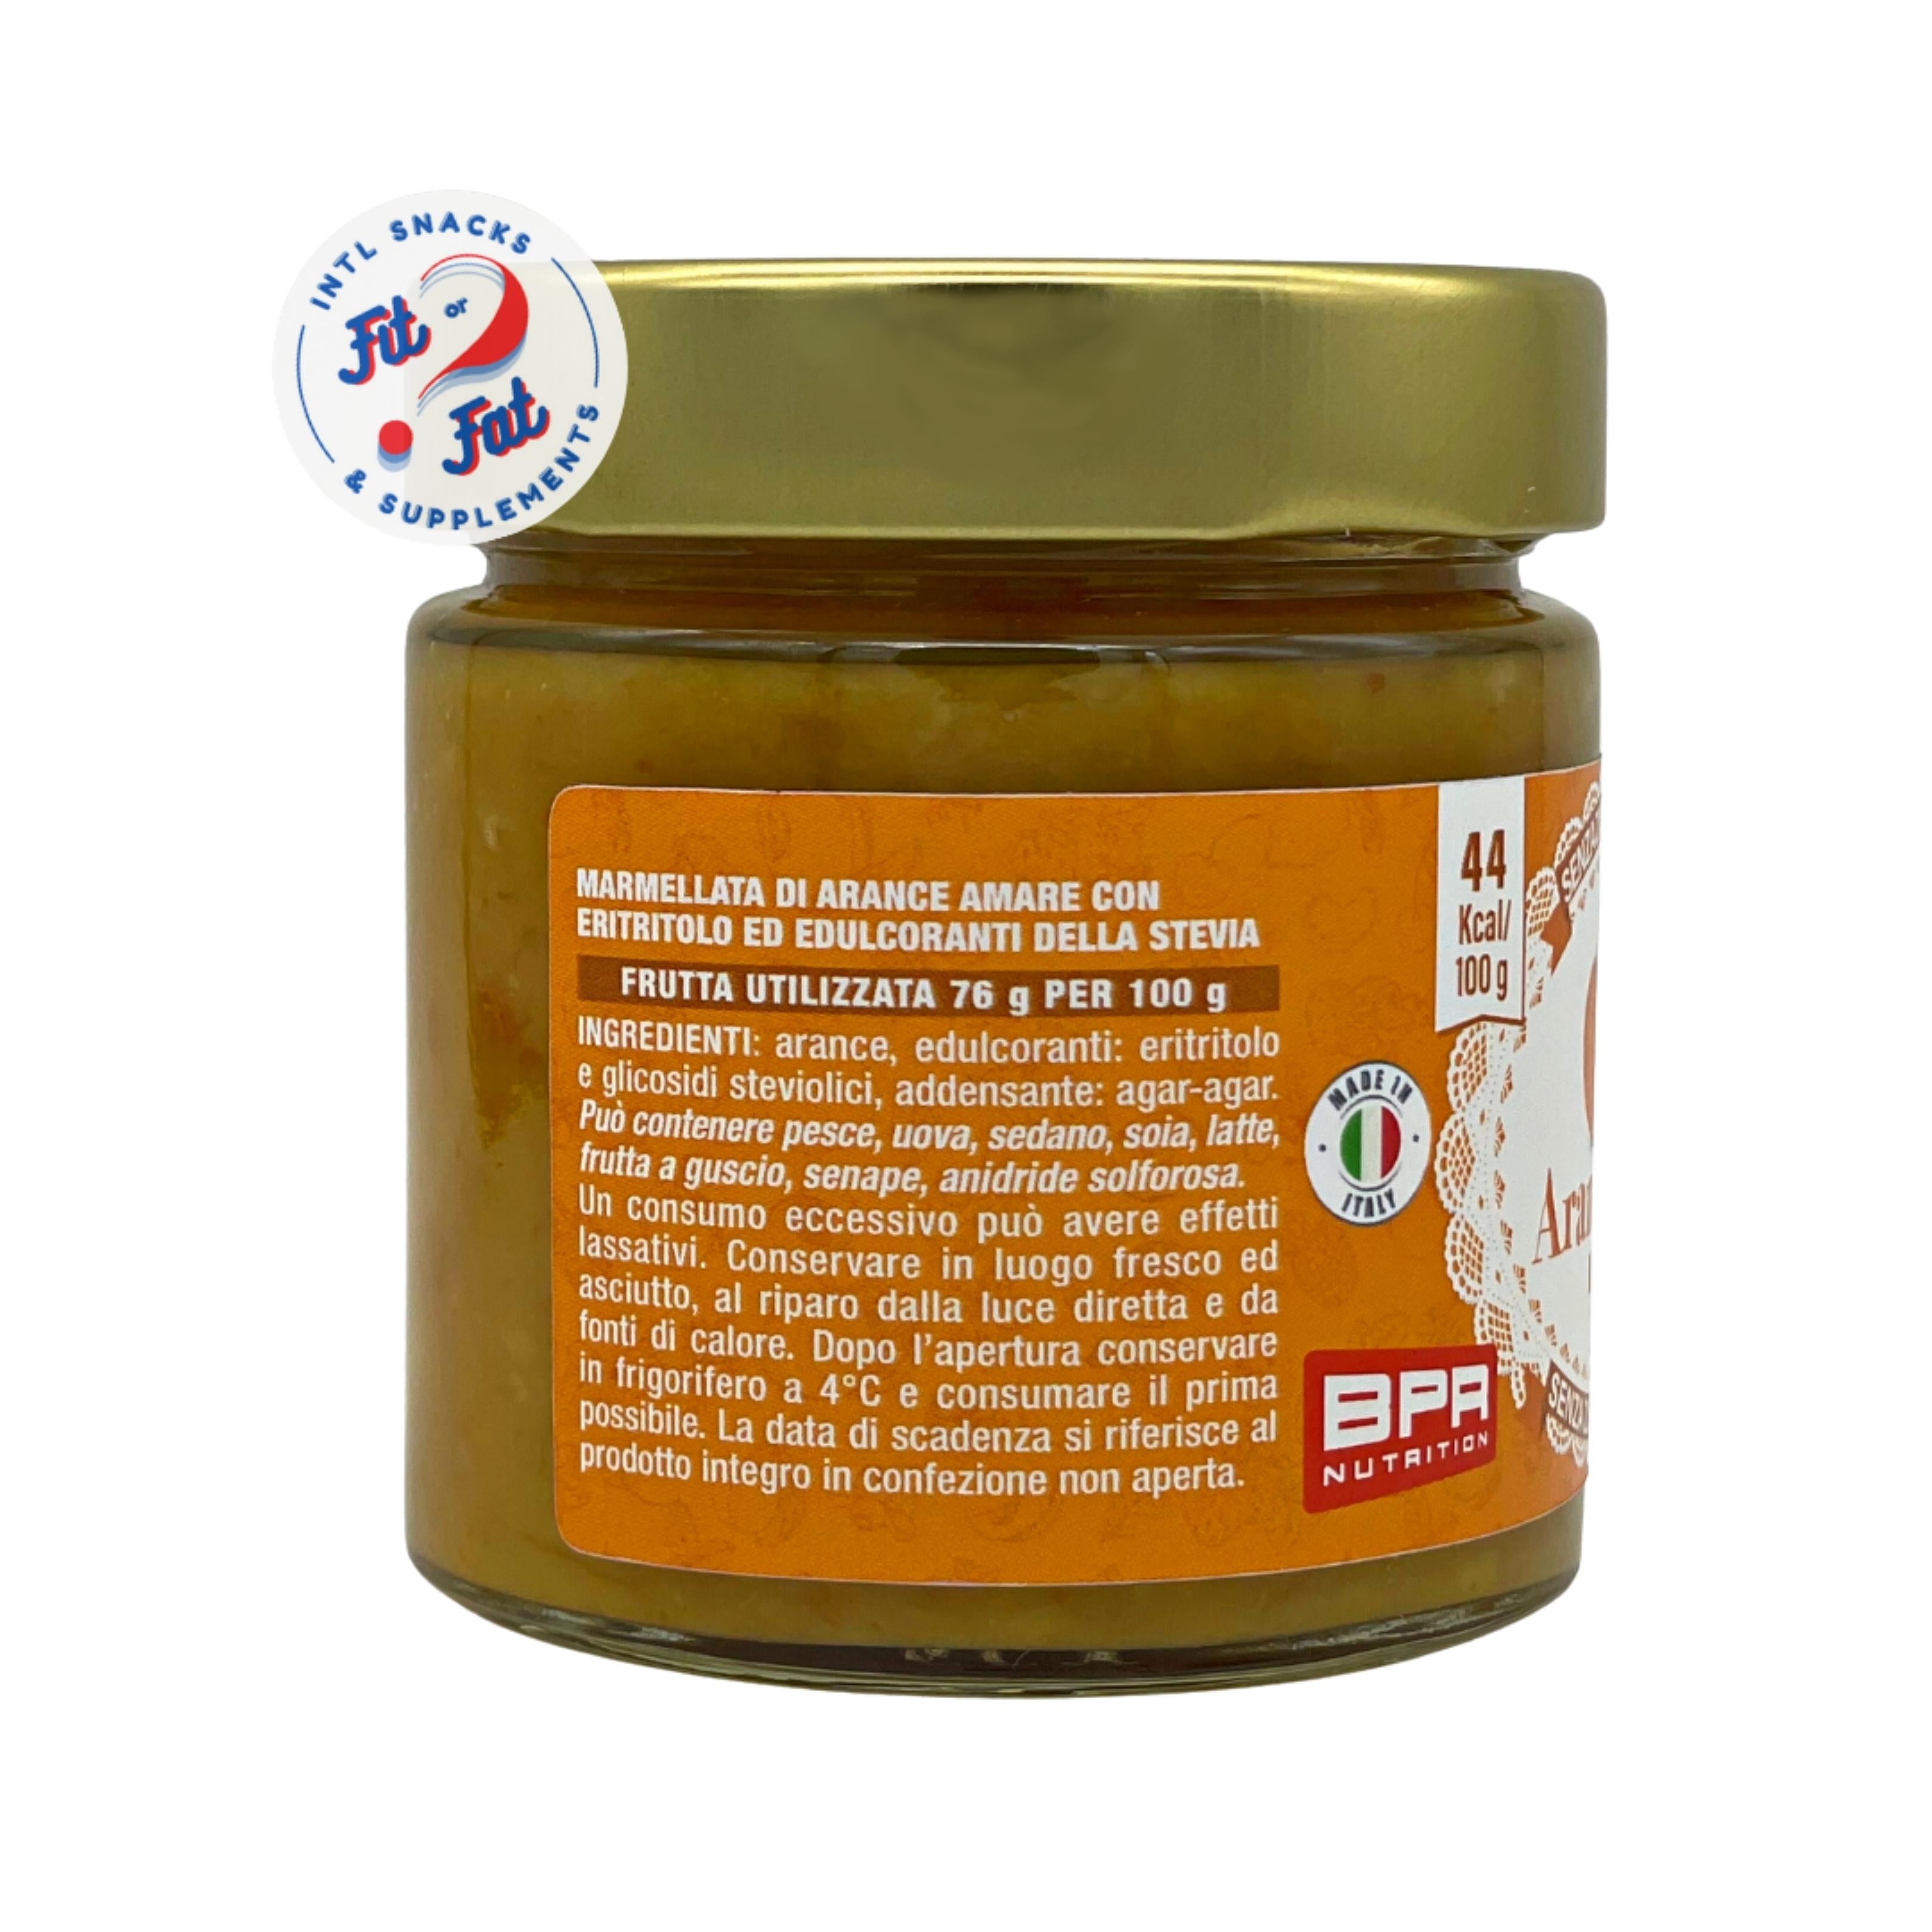 Bpr Nutrition - Marmellata Arance Amare con stevia 200g